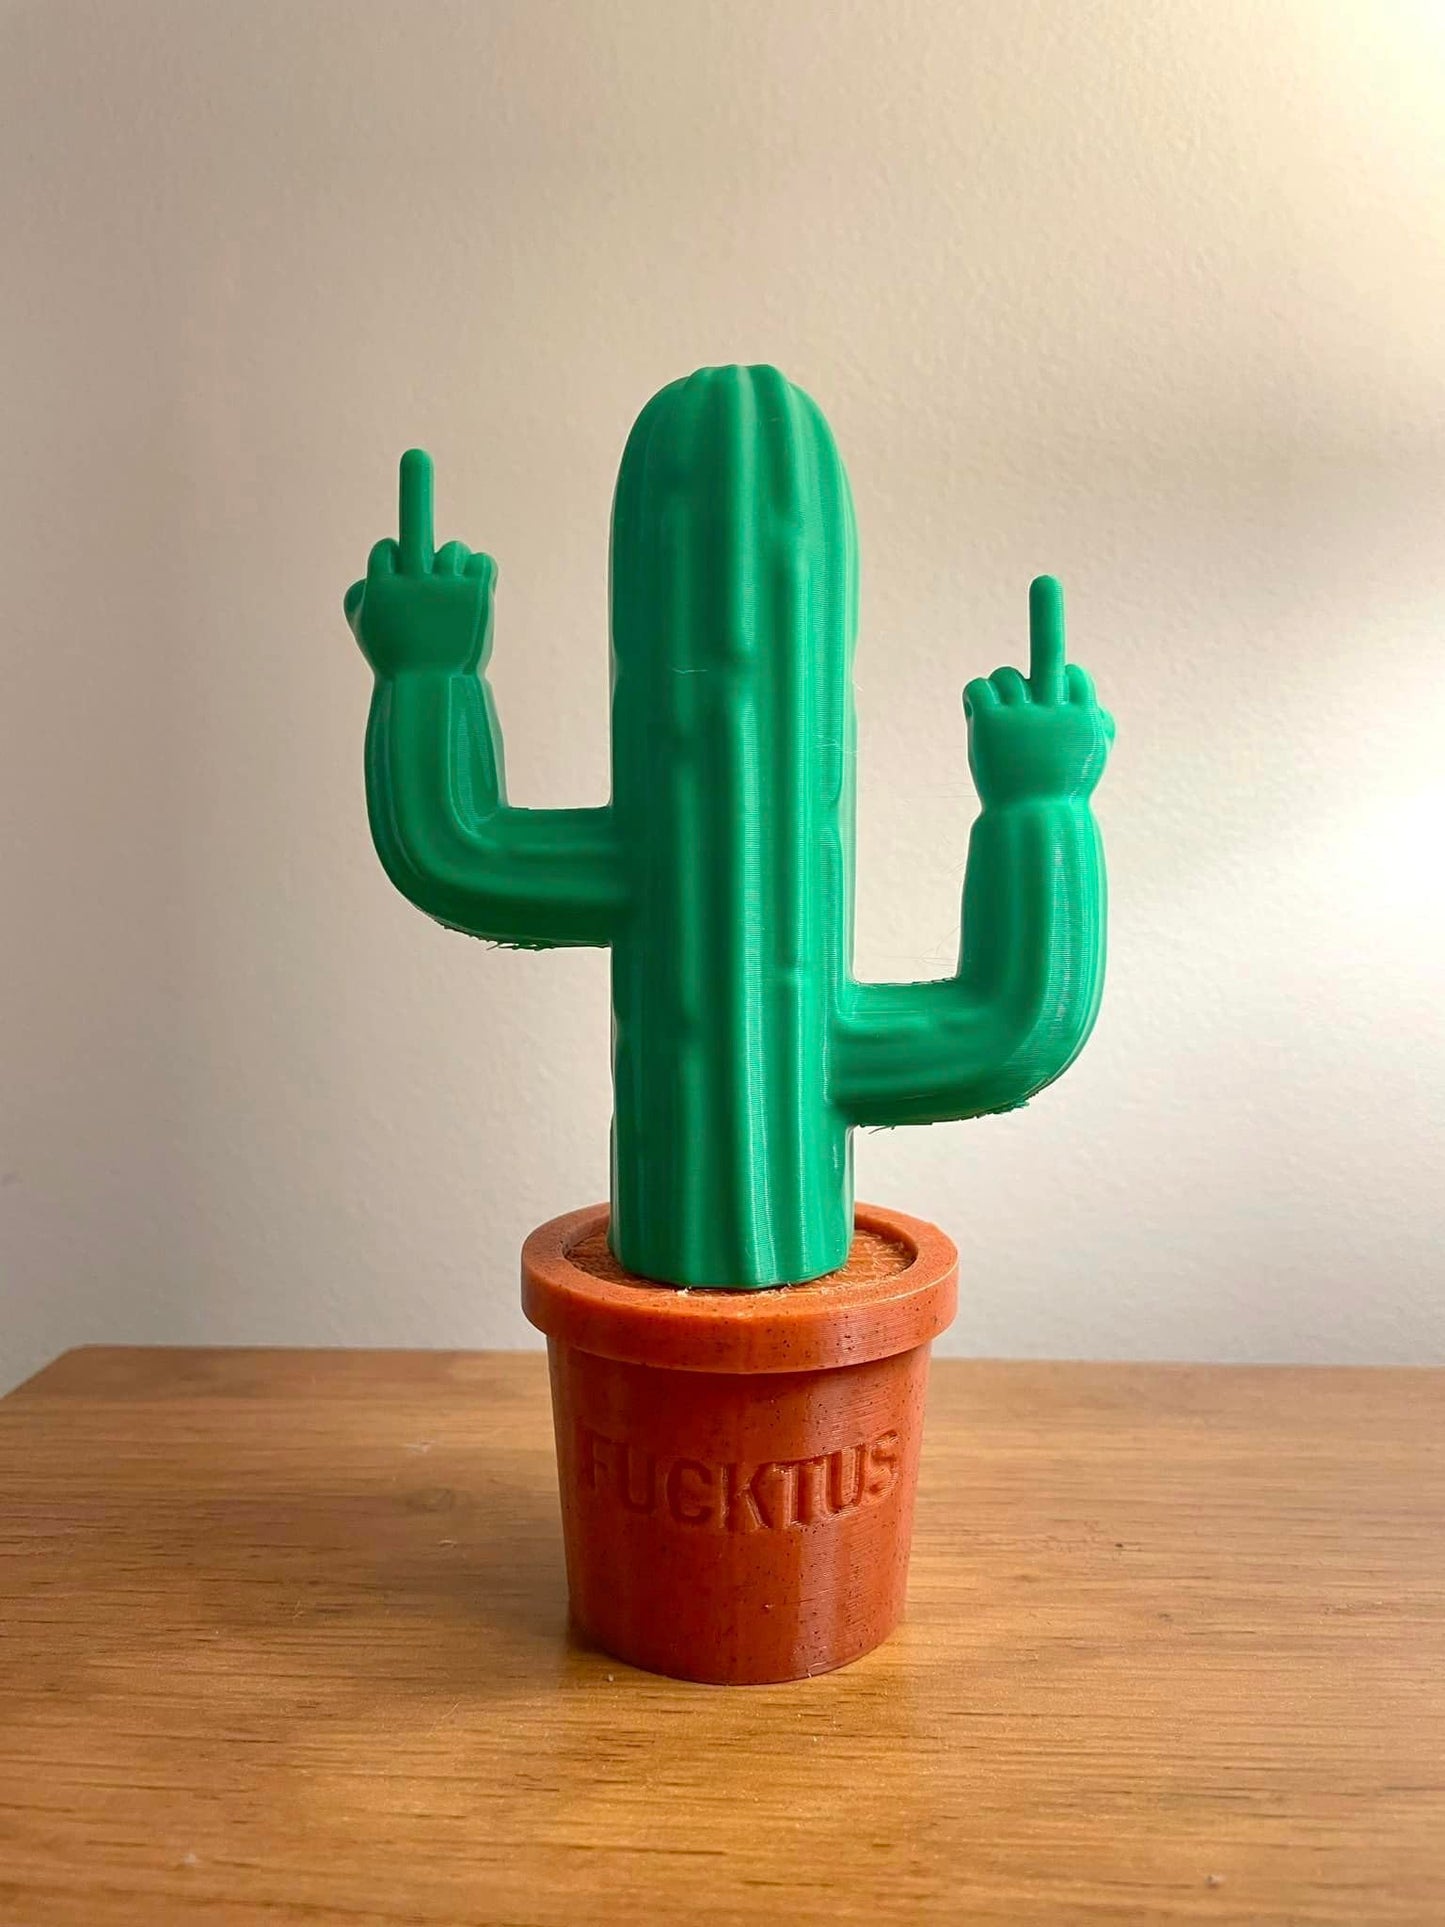 Fucktus - The 3D Printed Middle Finger Cactus Figurine